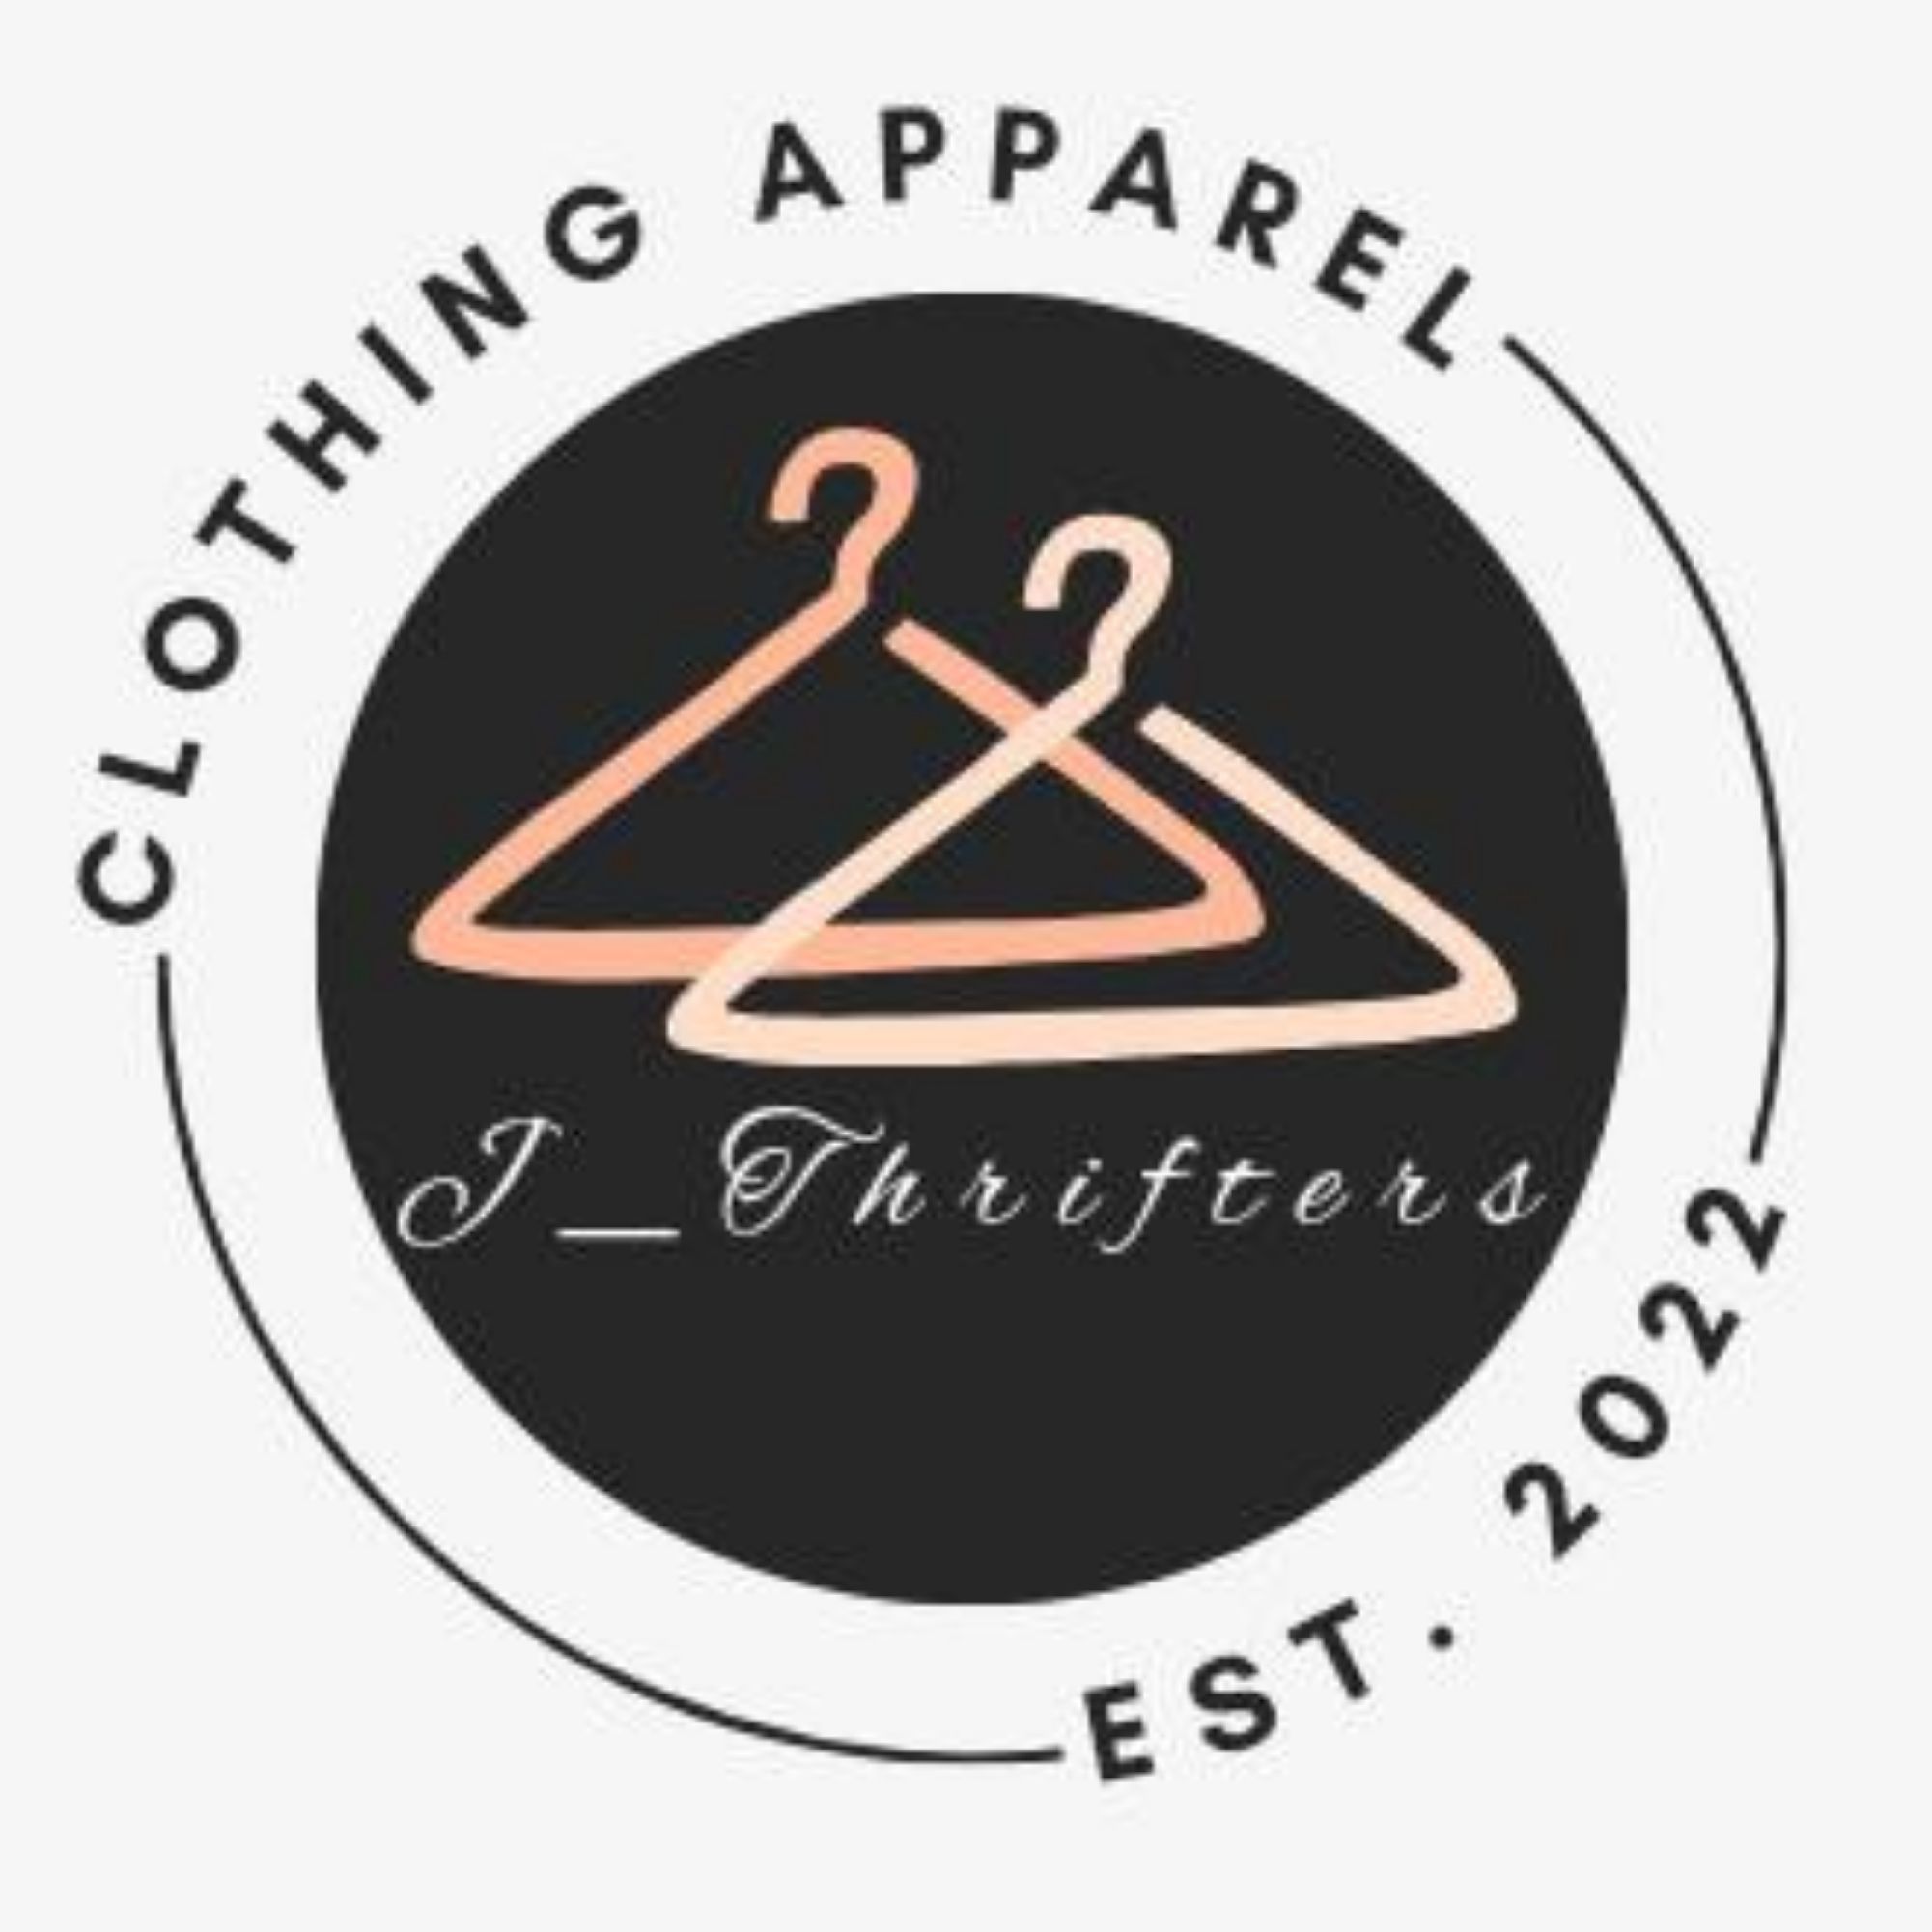 JThrifter's_Shop, Online Shop | Shopee Philippines